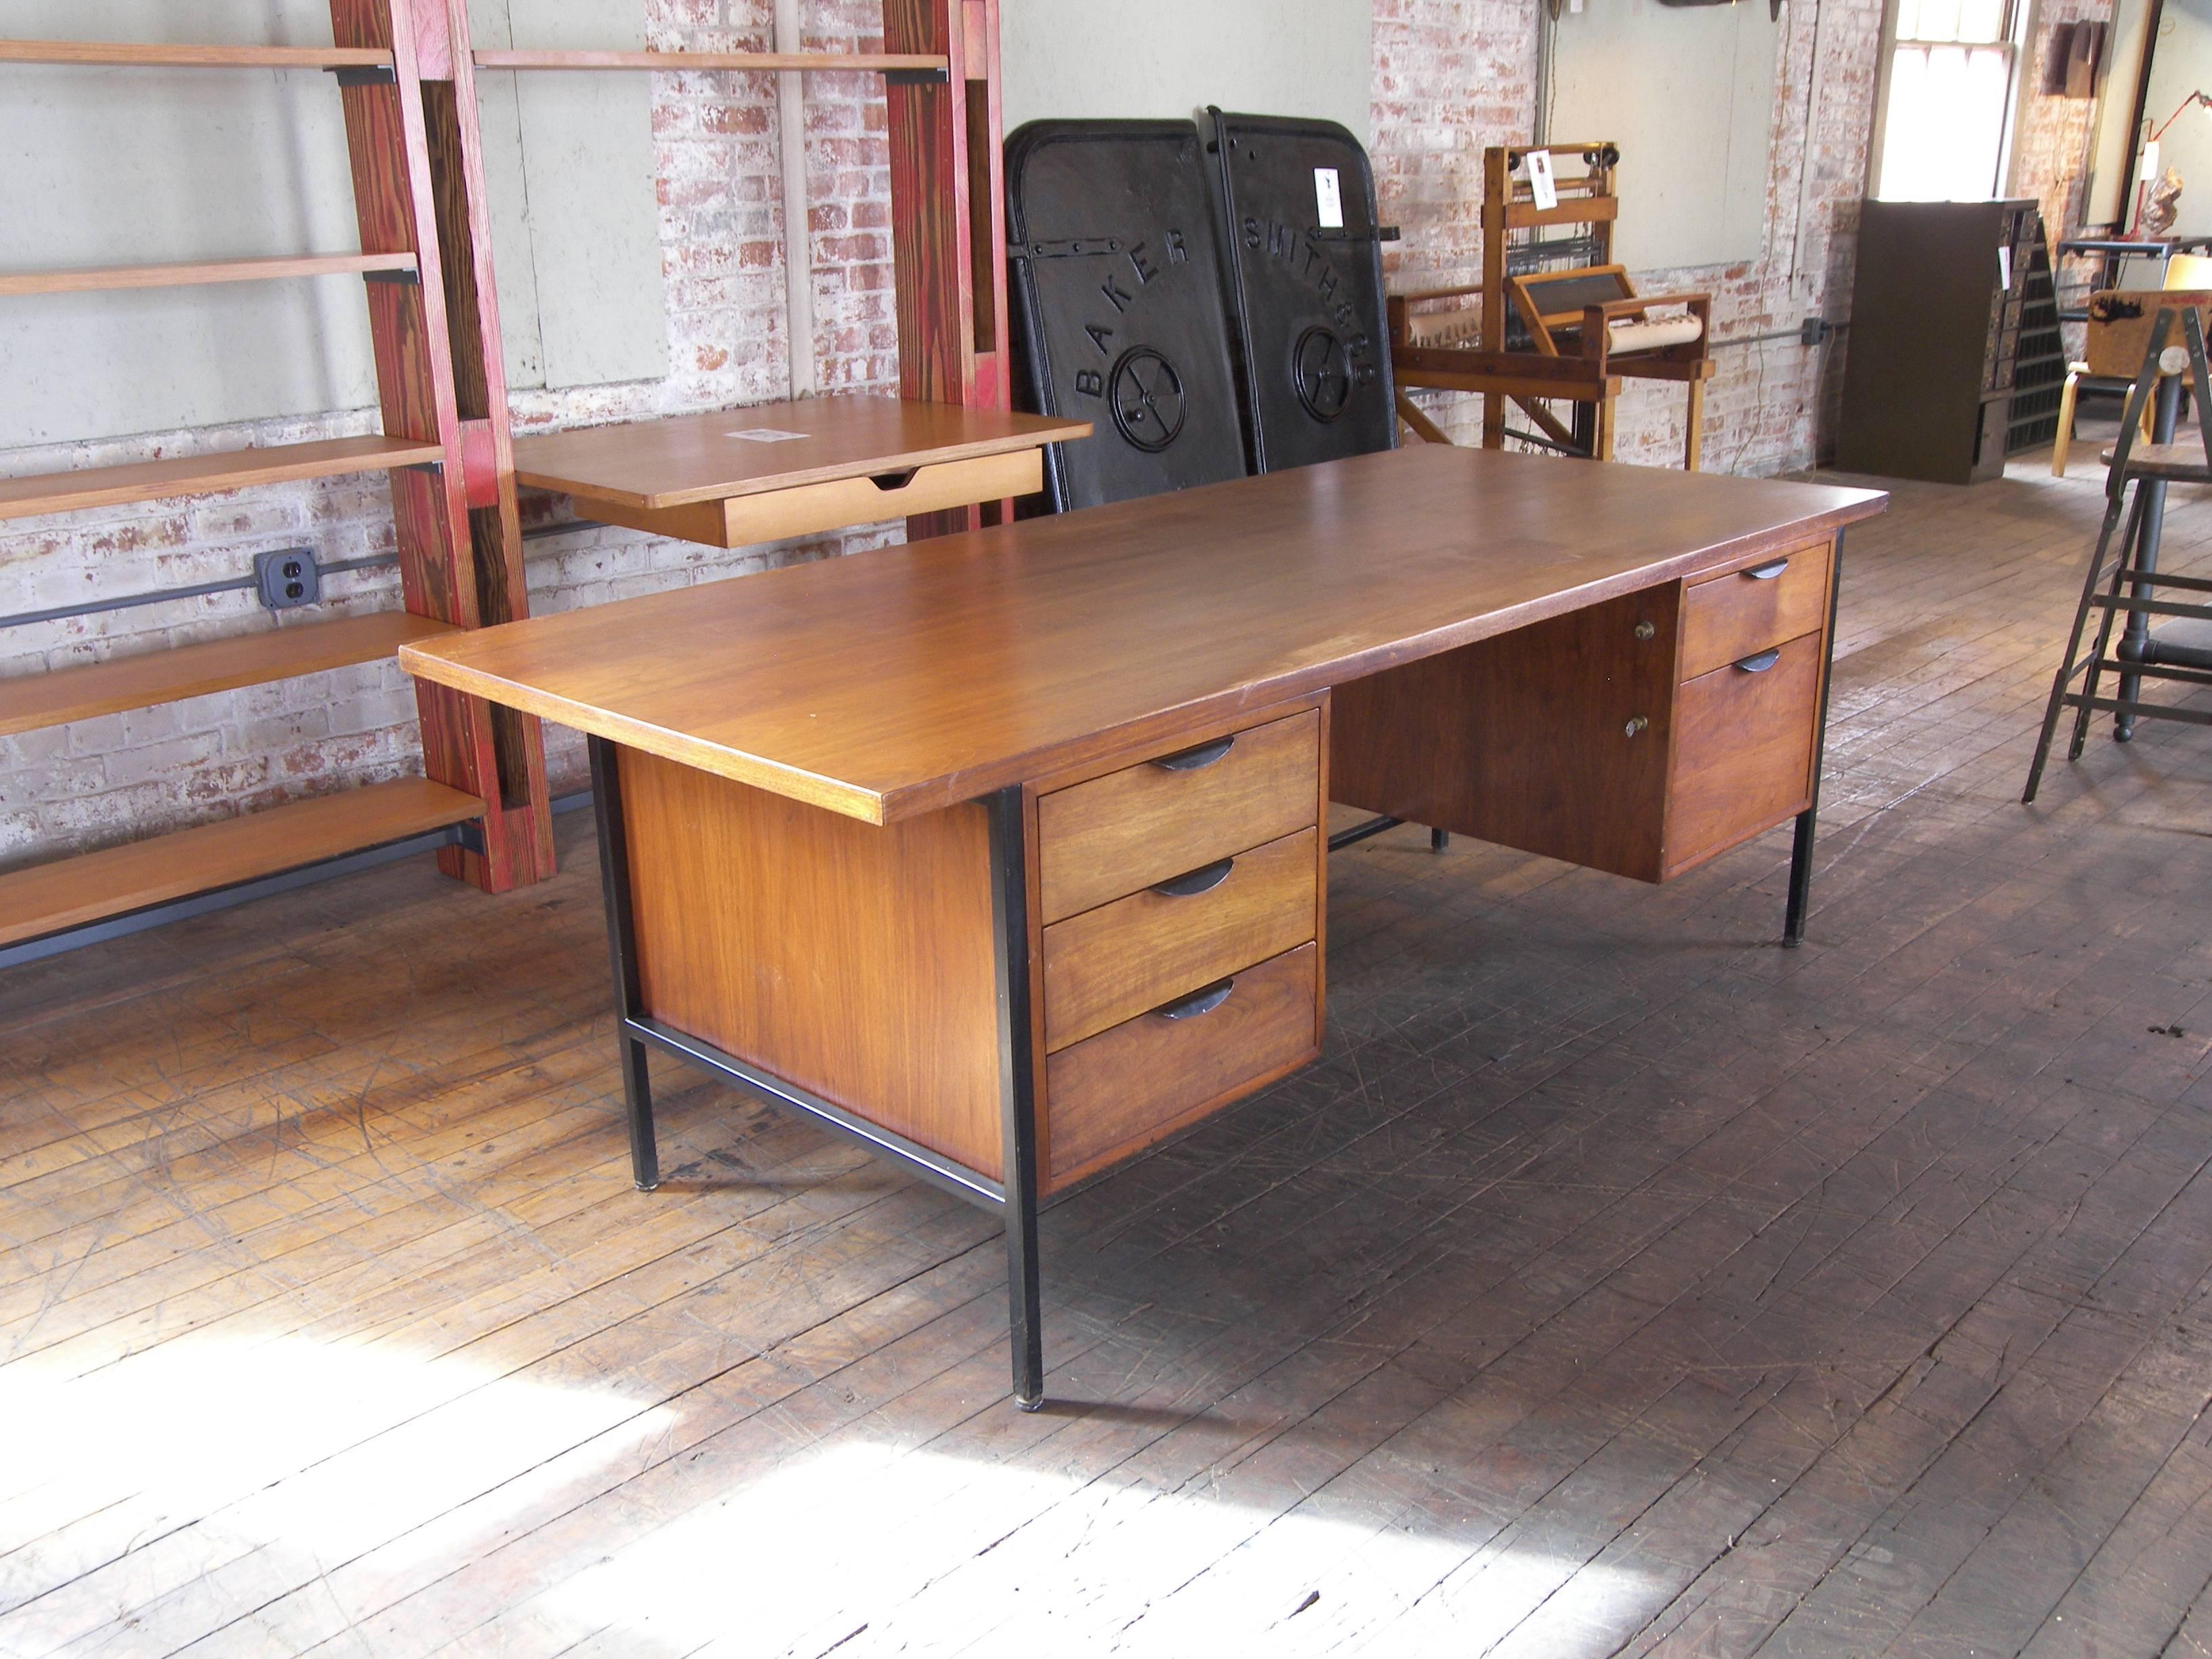 1950s modern wood and metal desk.